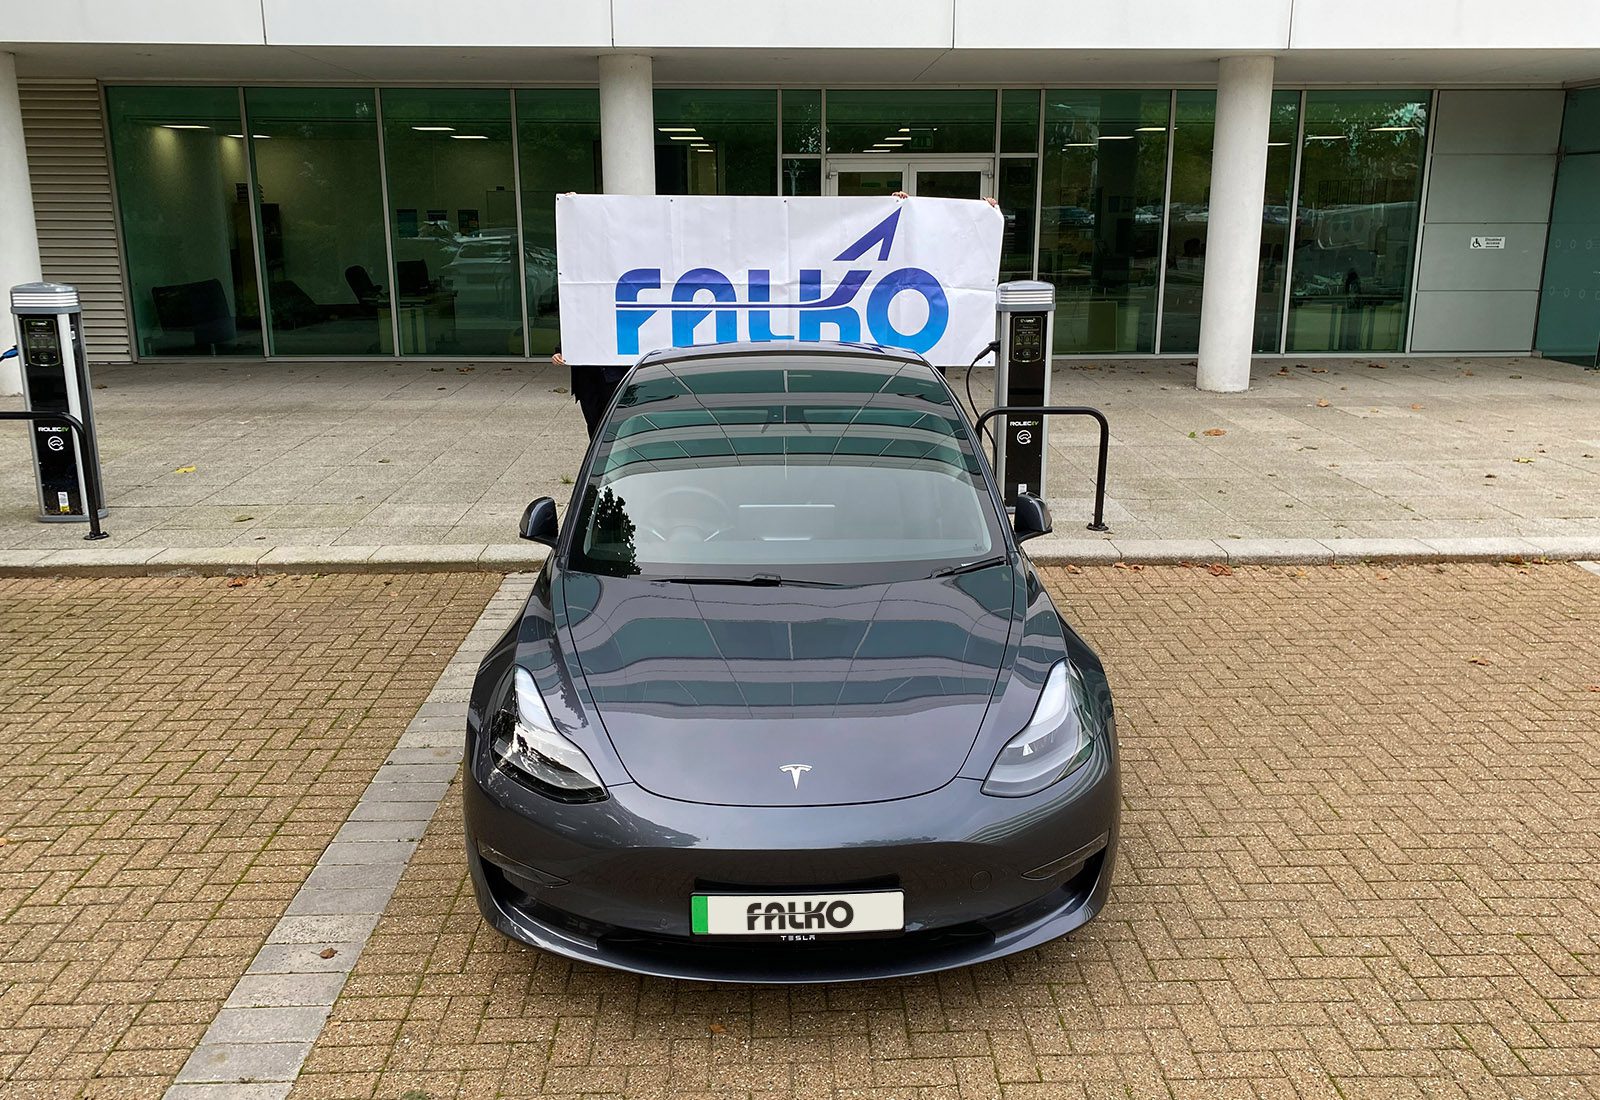 Falko Electric Vehicle Salary Sacrifice Scheme 